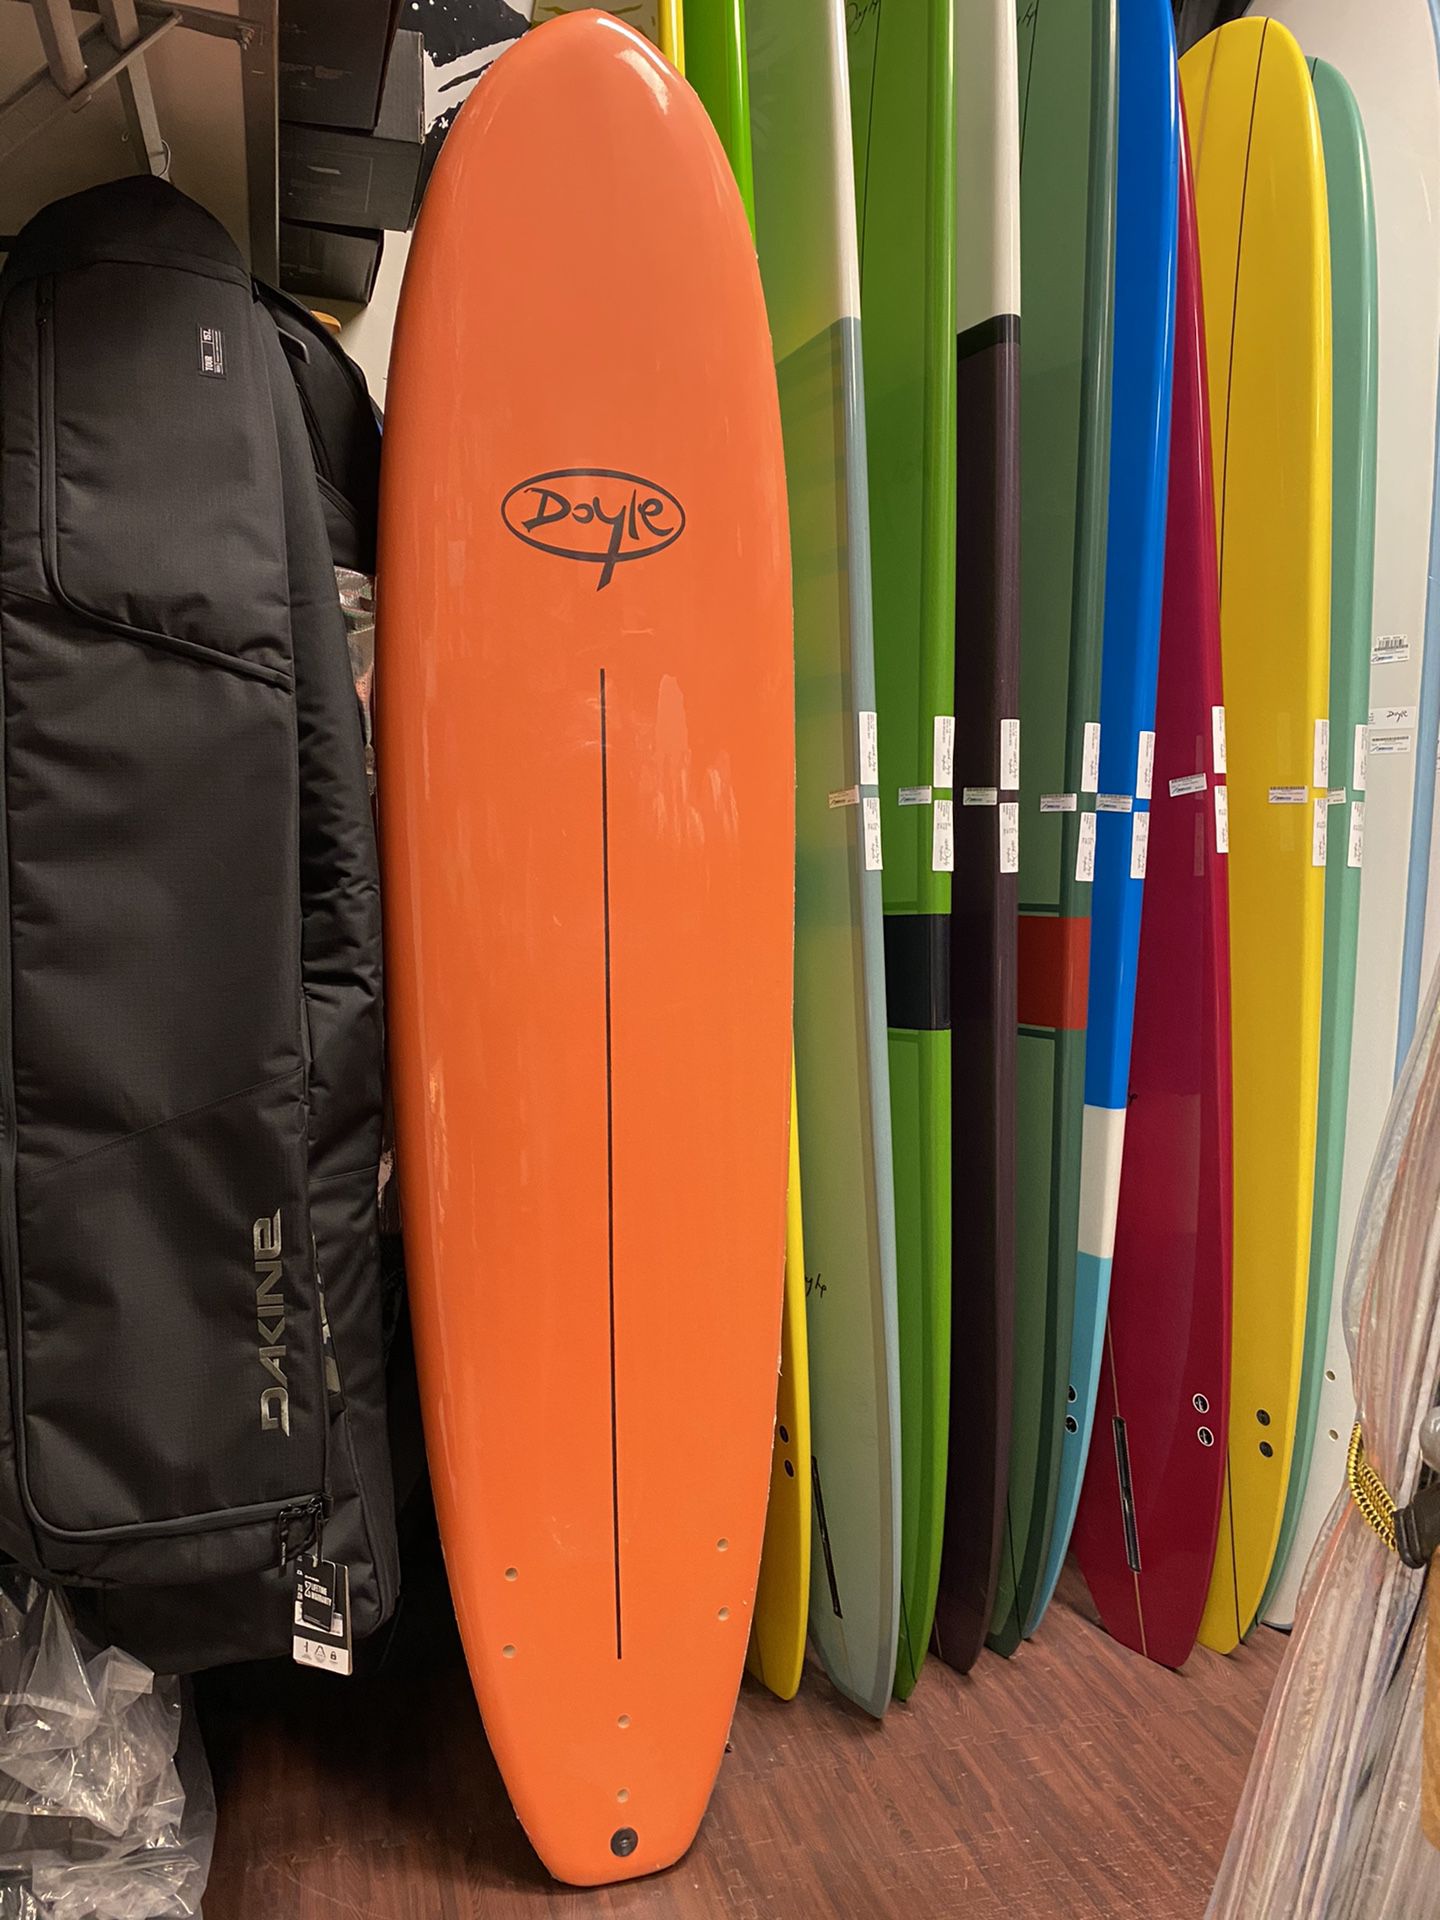 Doyle 8’ Performance soft top longboard surfboard